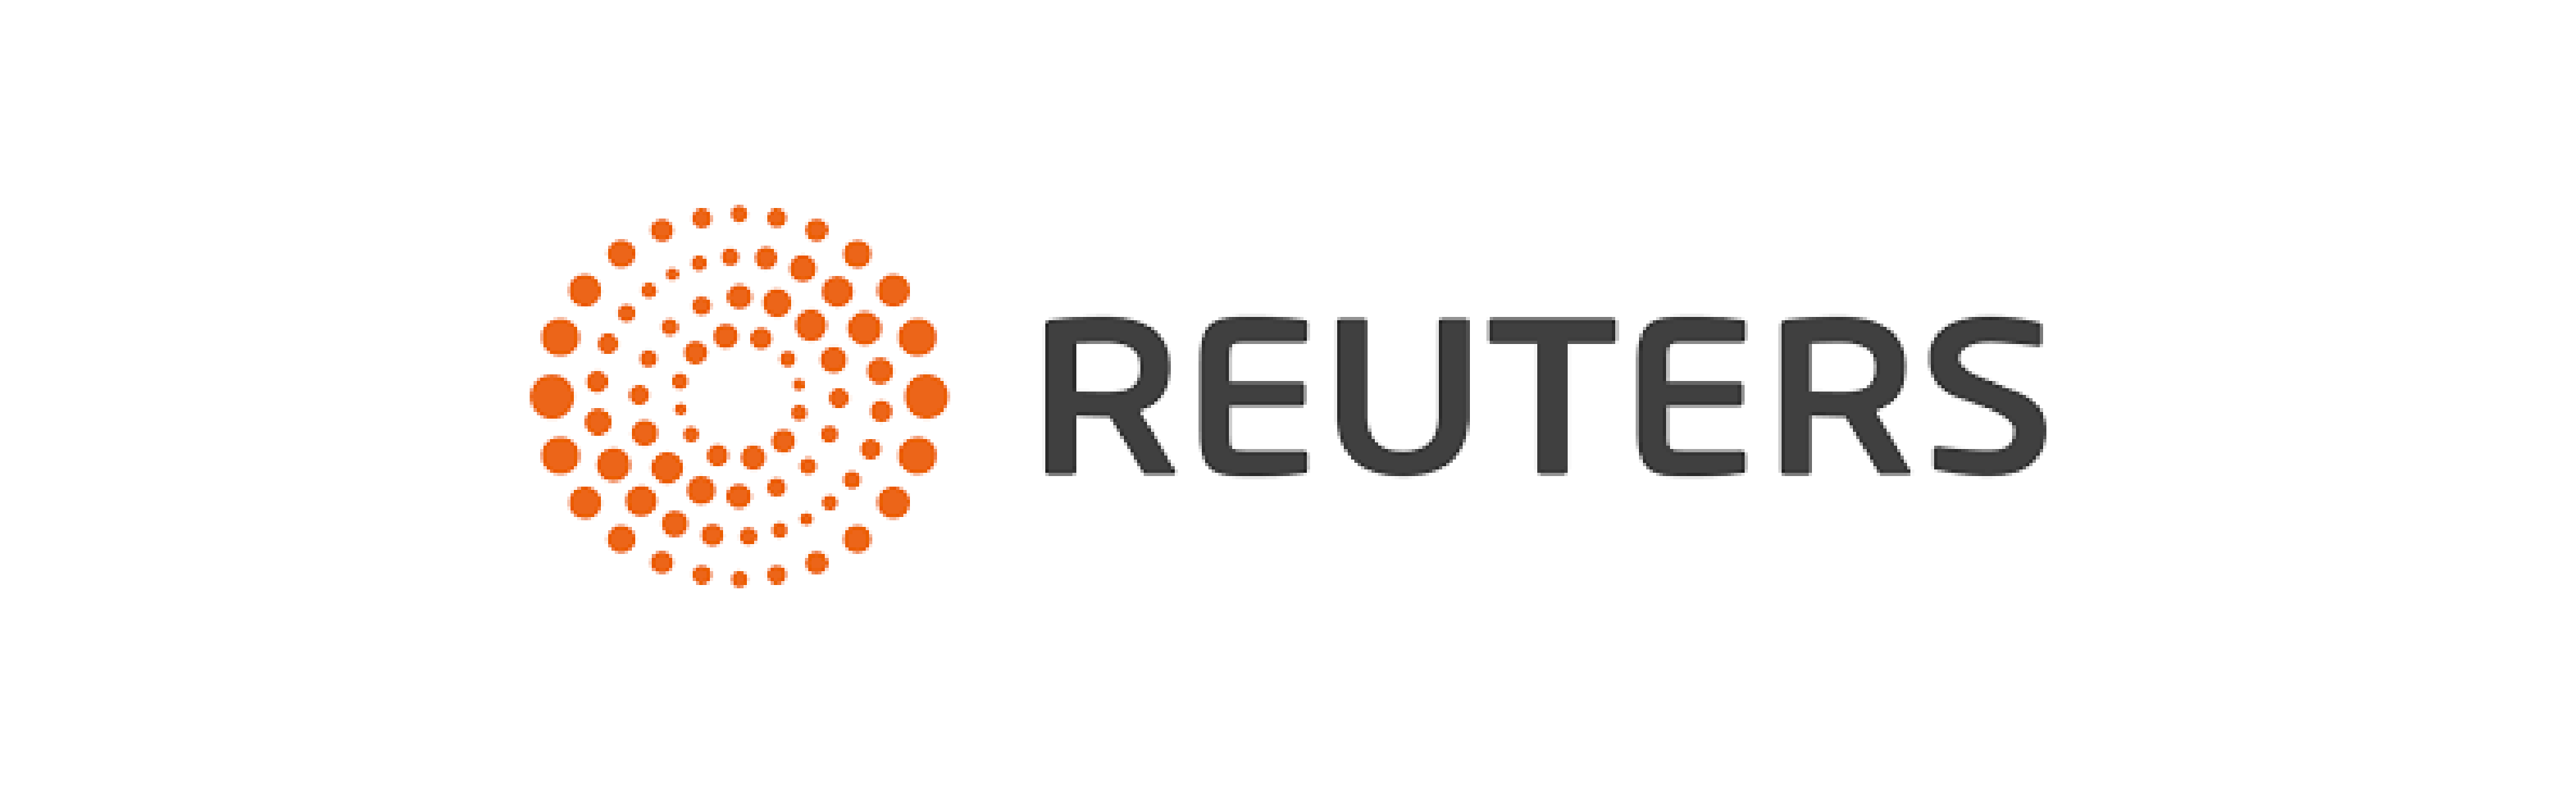 logo of reuters